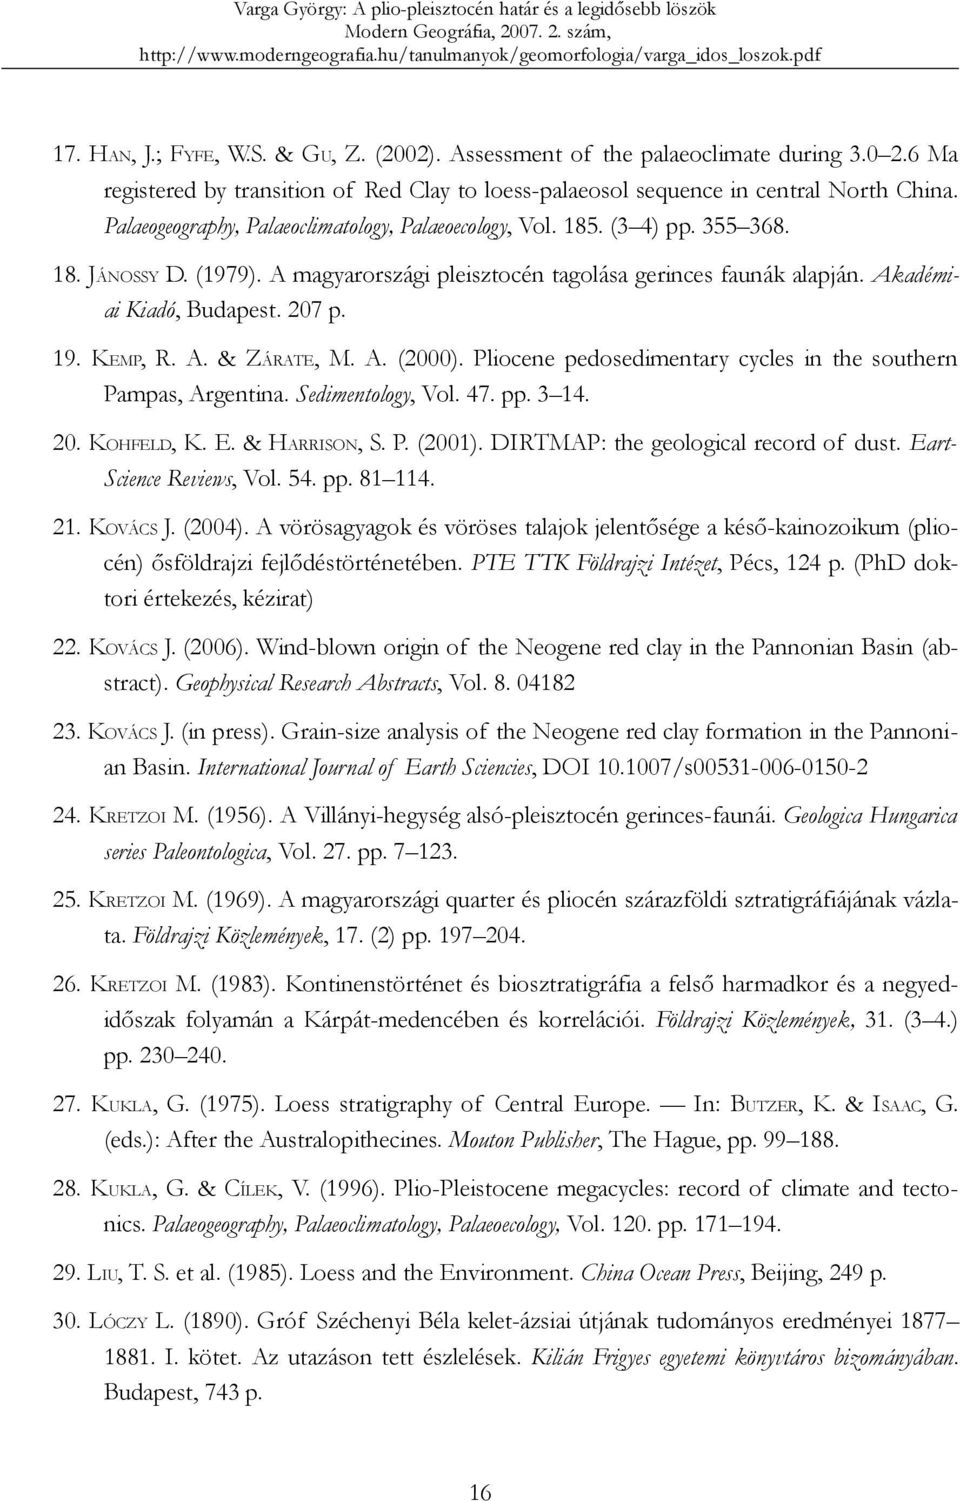 19. KEMP, R. A. & ZÁRATE, M. A. (2000). Pliocene pedosedimentary cycles in the southern Pampas, Argentina. Sedimentology, Vol. 47. pp. 3 14. 20. KOHFELD, K. E. & HARRISON, S. P. (2001).